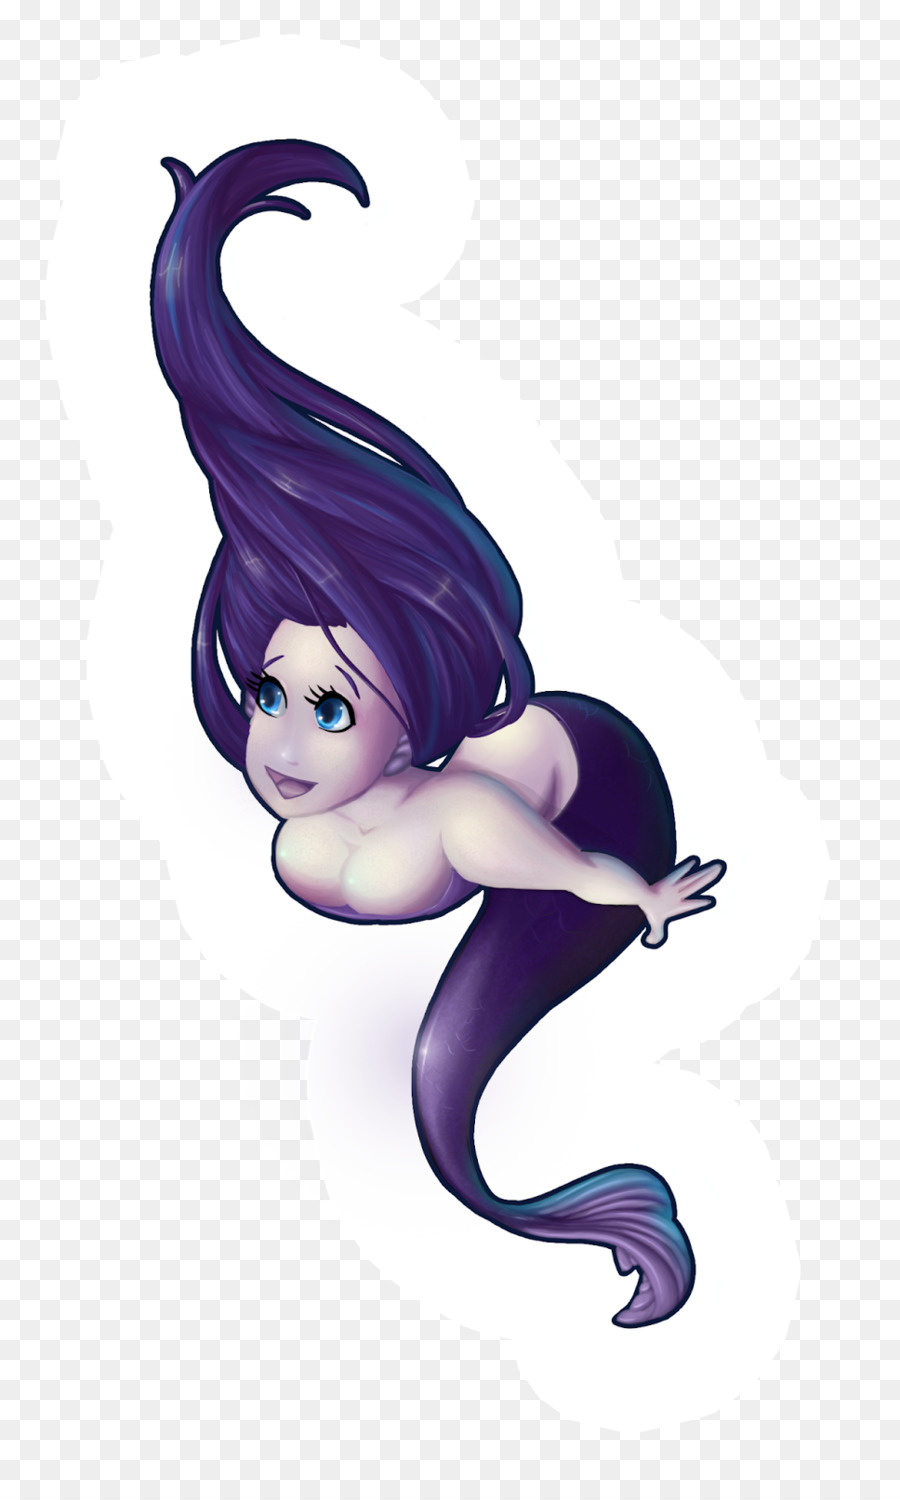 Meerjungfrau-Zeichnung Nymphe Fee - Meerjungfrau